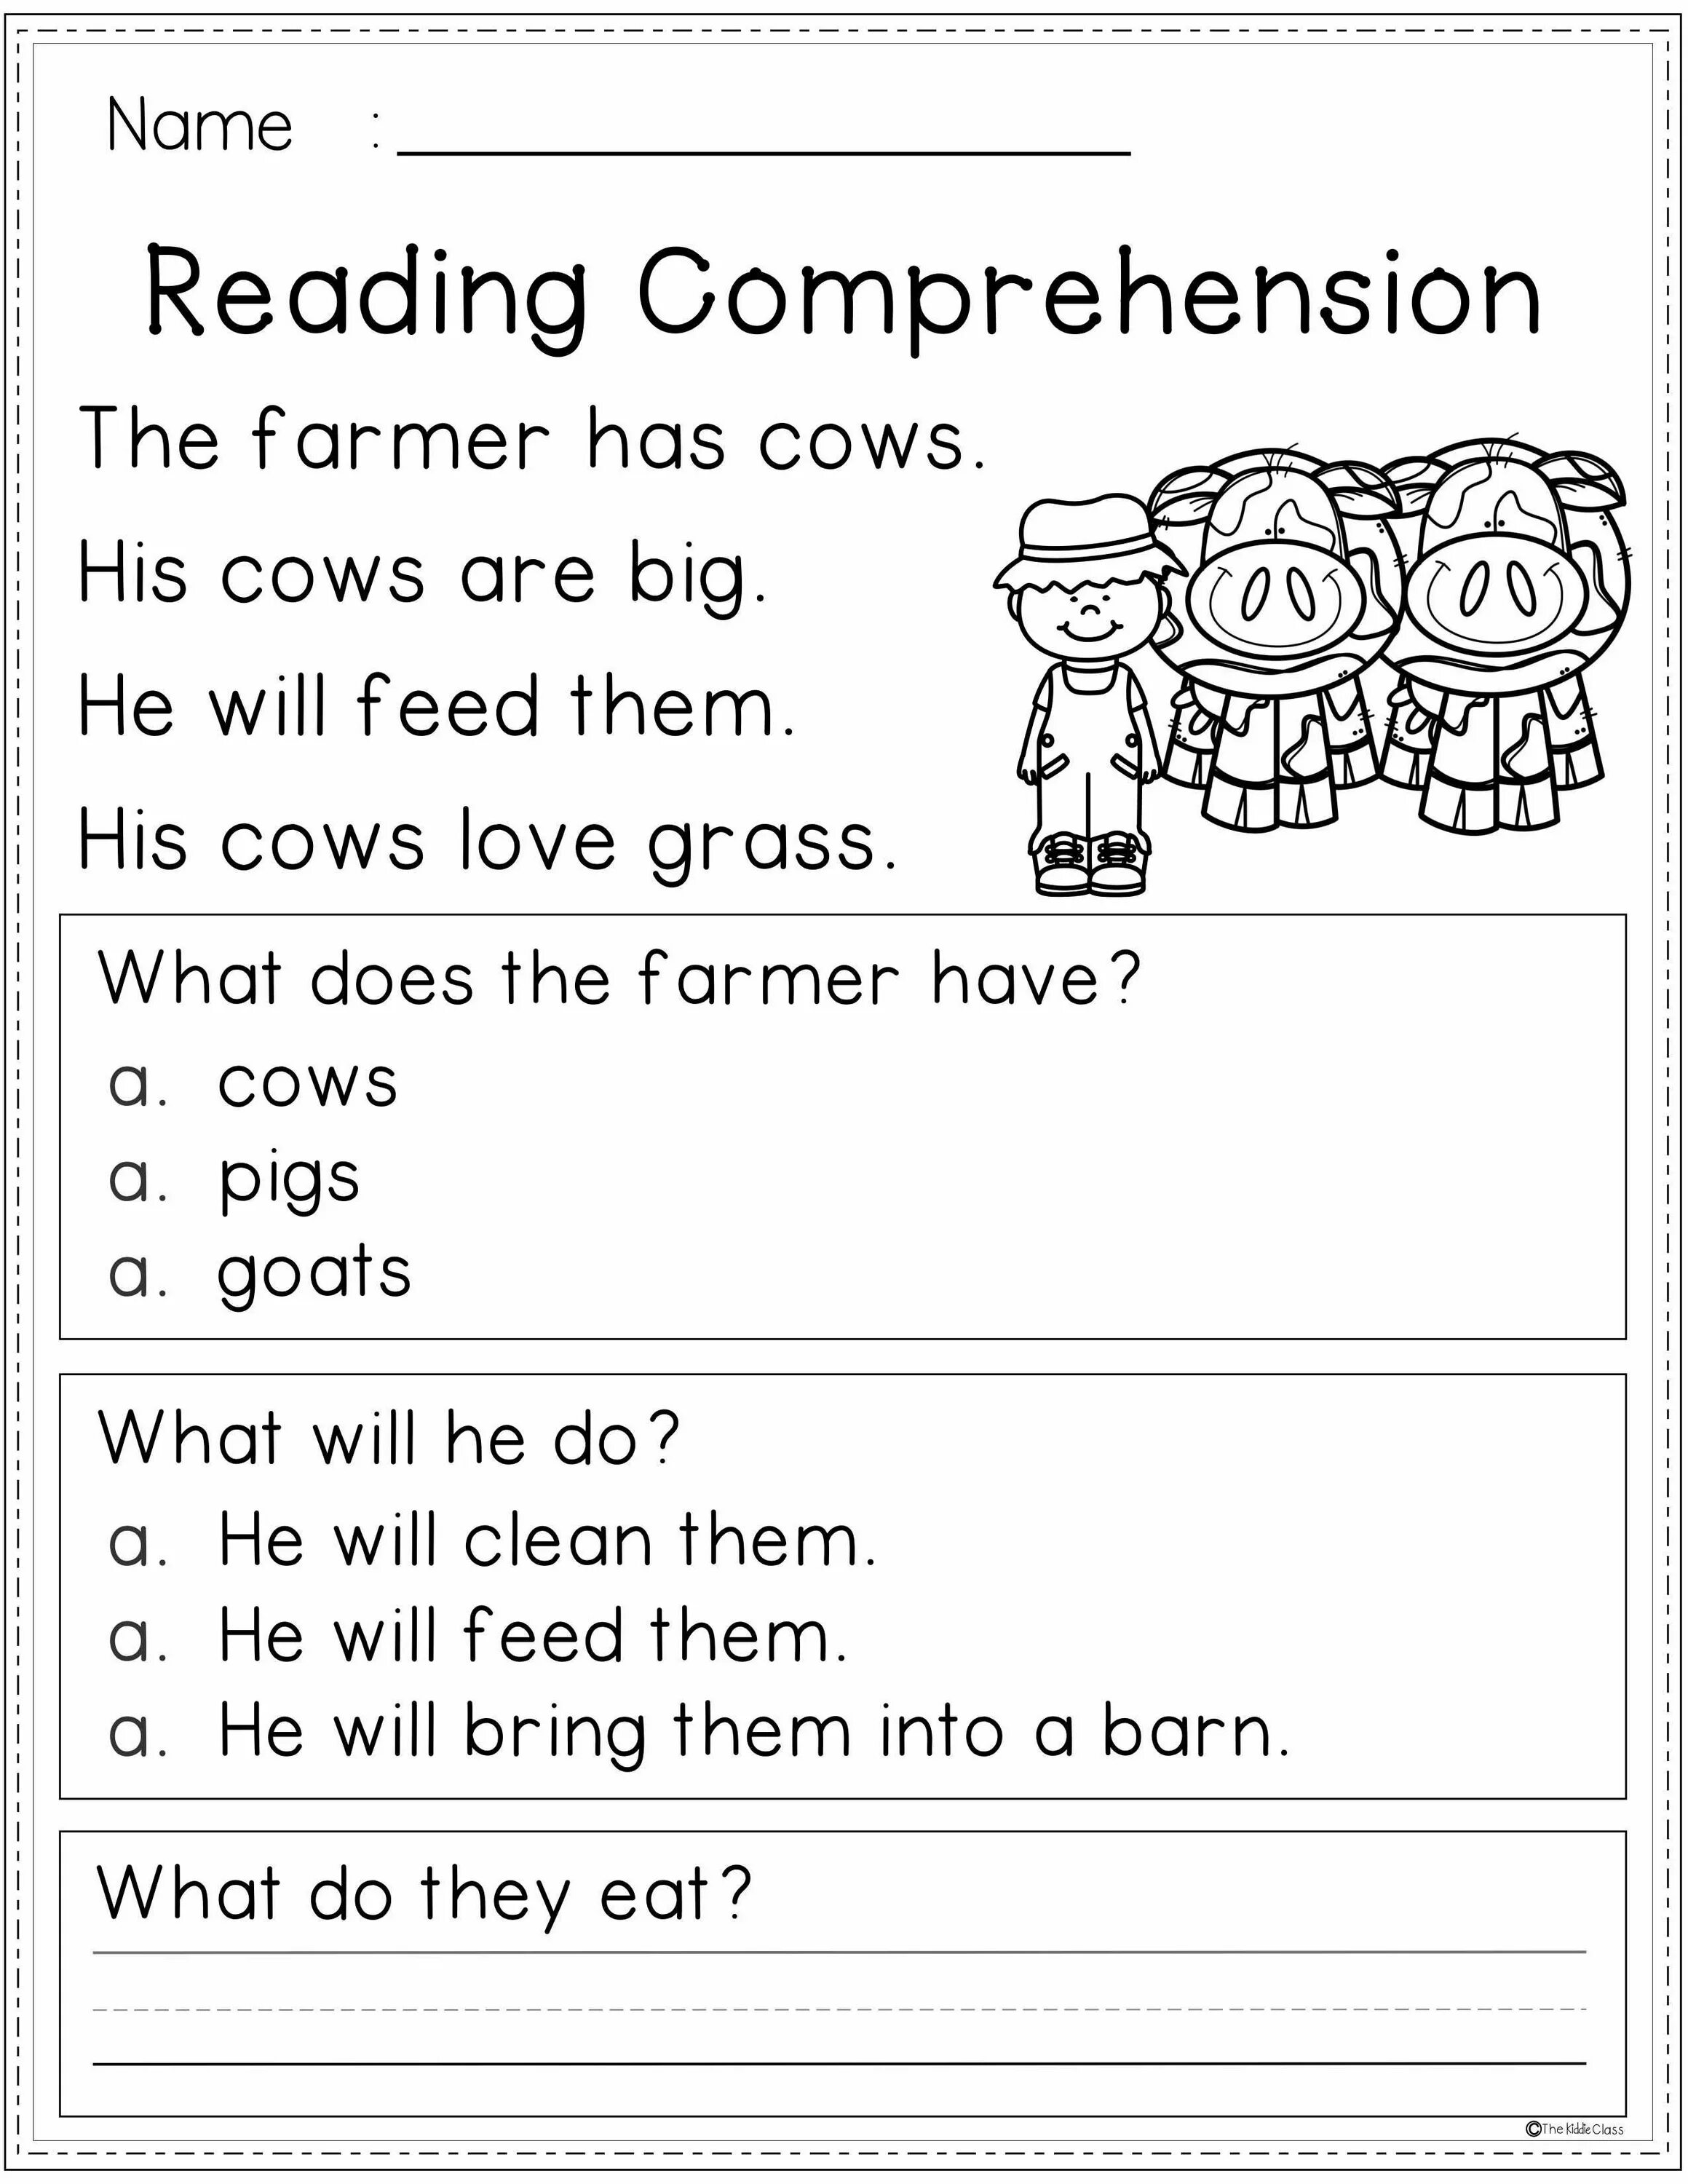 Reading Comprehension. Reading Comprehension 3 класс. Reading Comprehension Worksheets 3 класс. Reading Comprehension 2 класс.